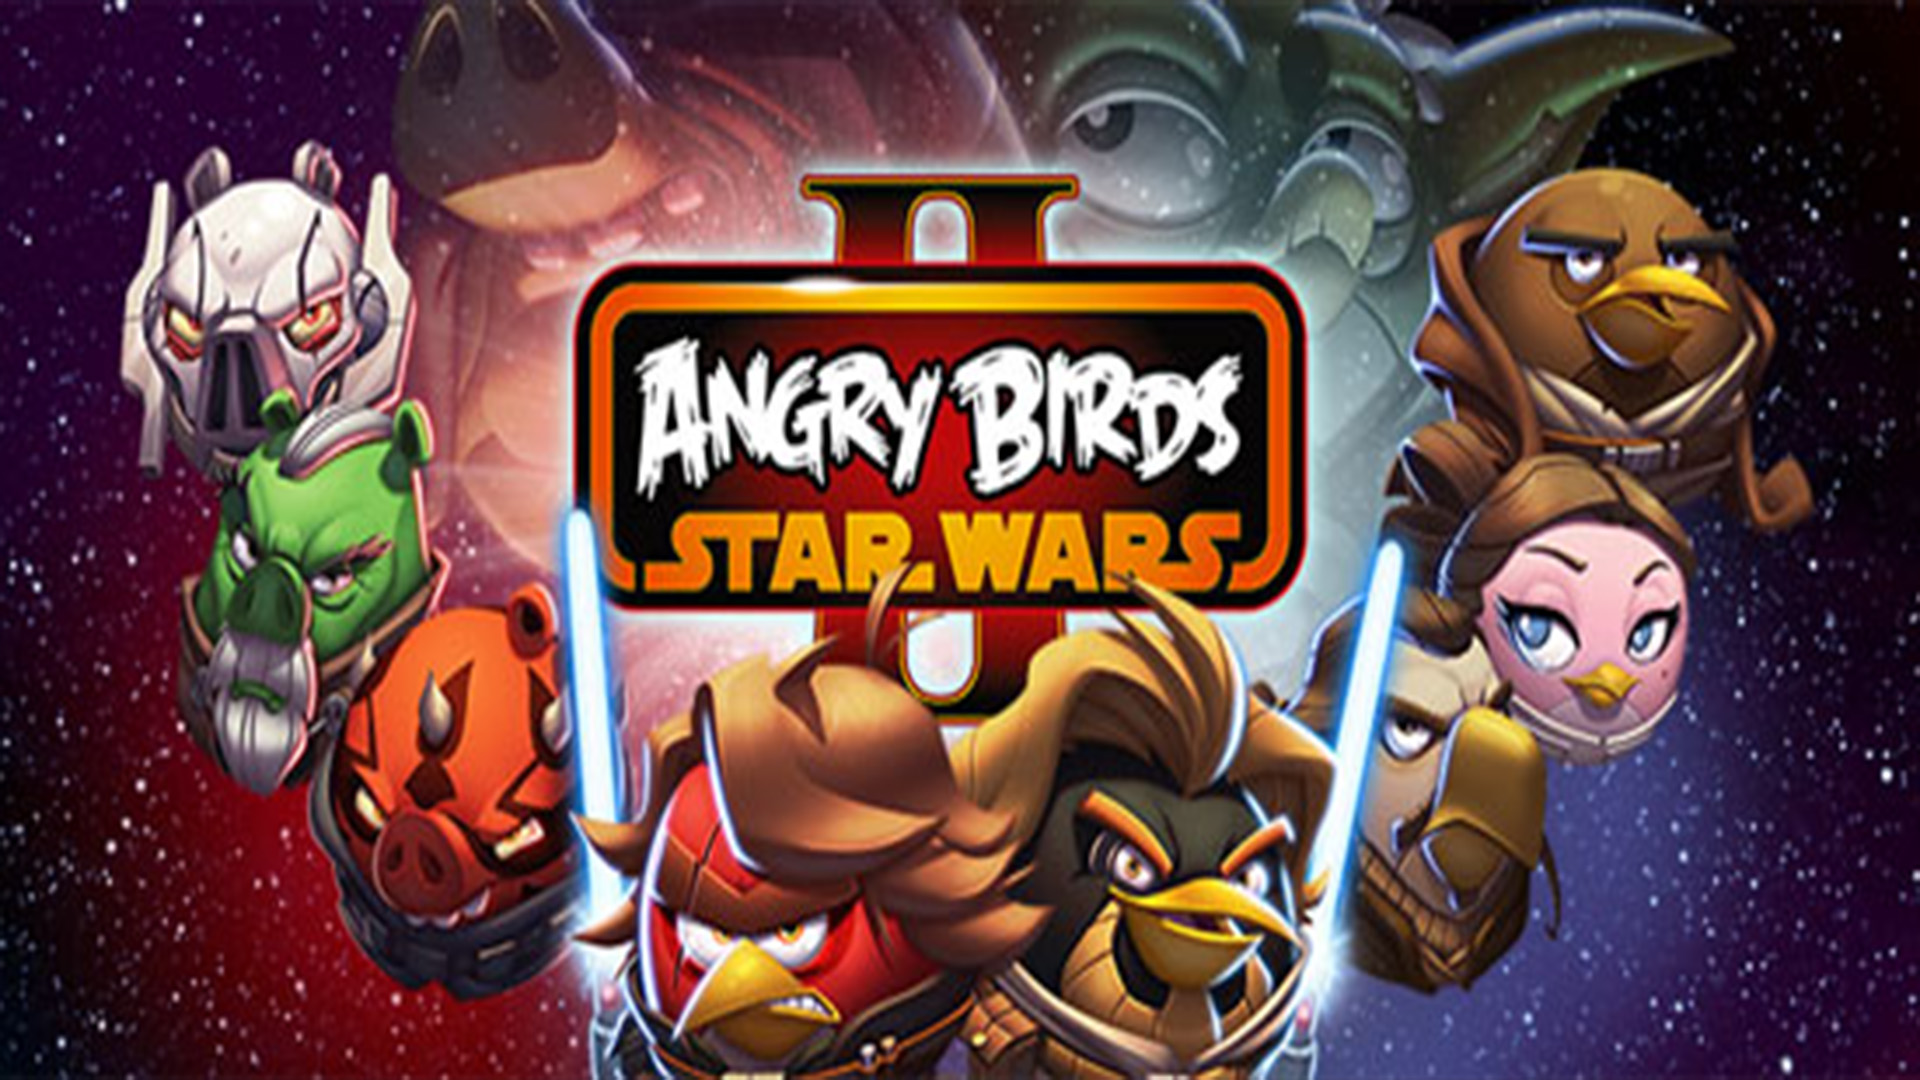 Angry Birds: Star Wars 2 HD Wallpaper